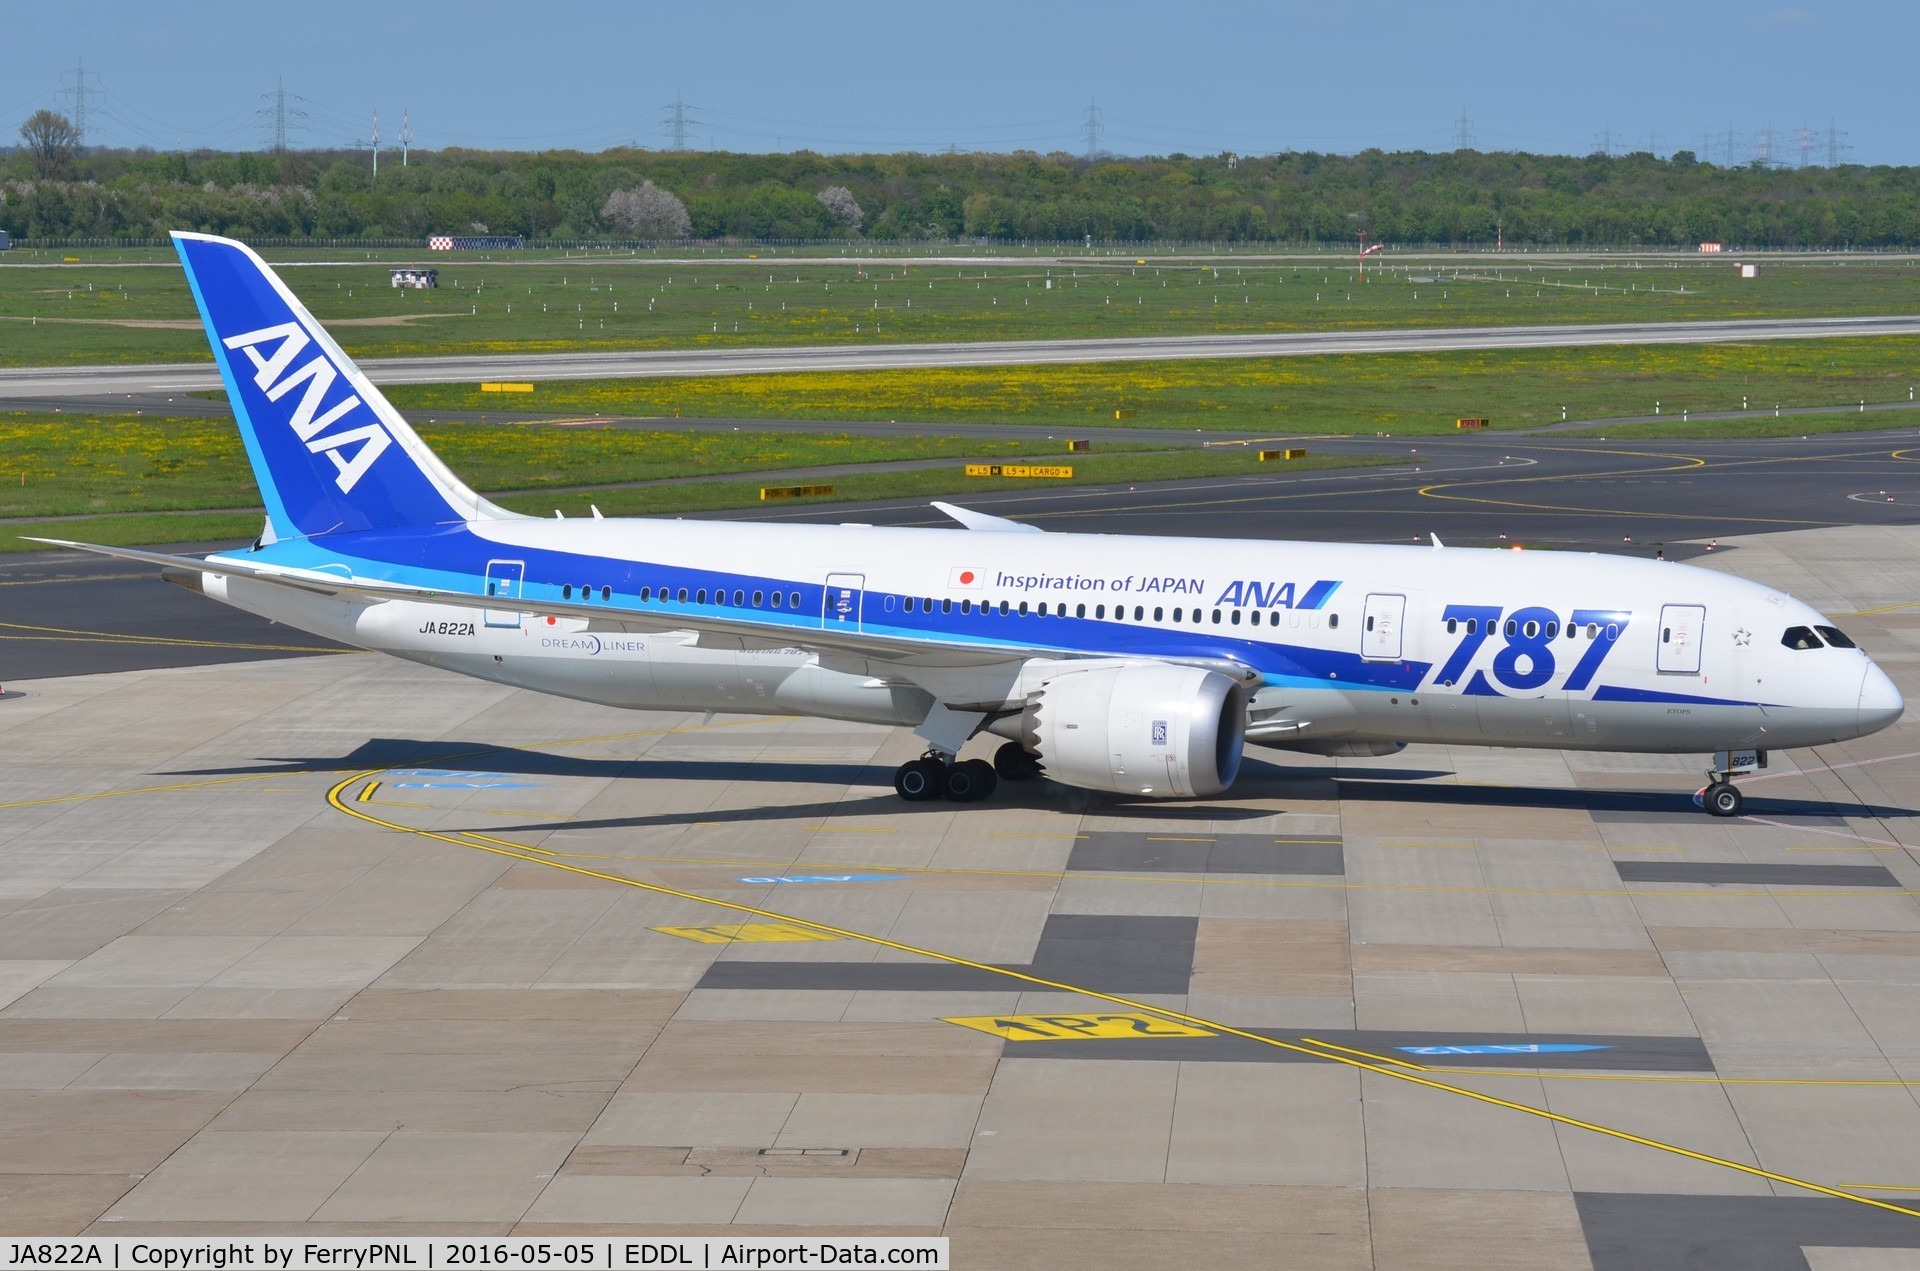 JA822A, 2013 Boeing 787-8 Dreamliner C/N 34512, ANA B788 arrived in DUS